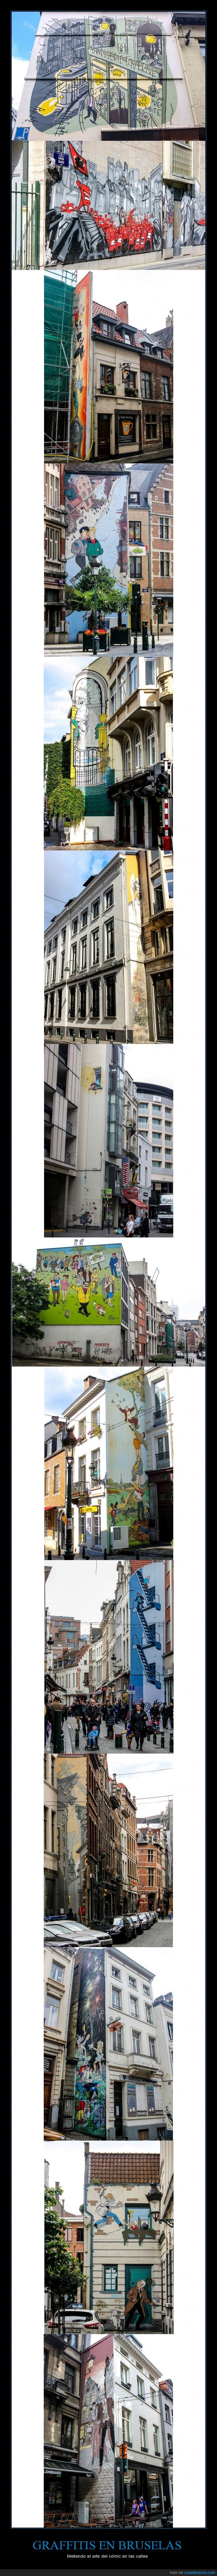 graffiti,Bruselas,Belgica,cómic,calle